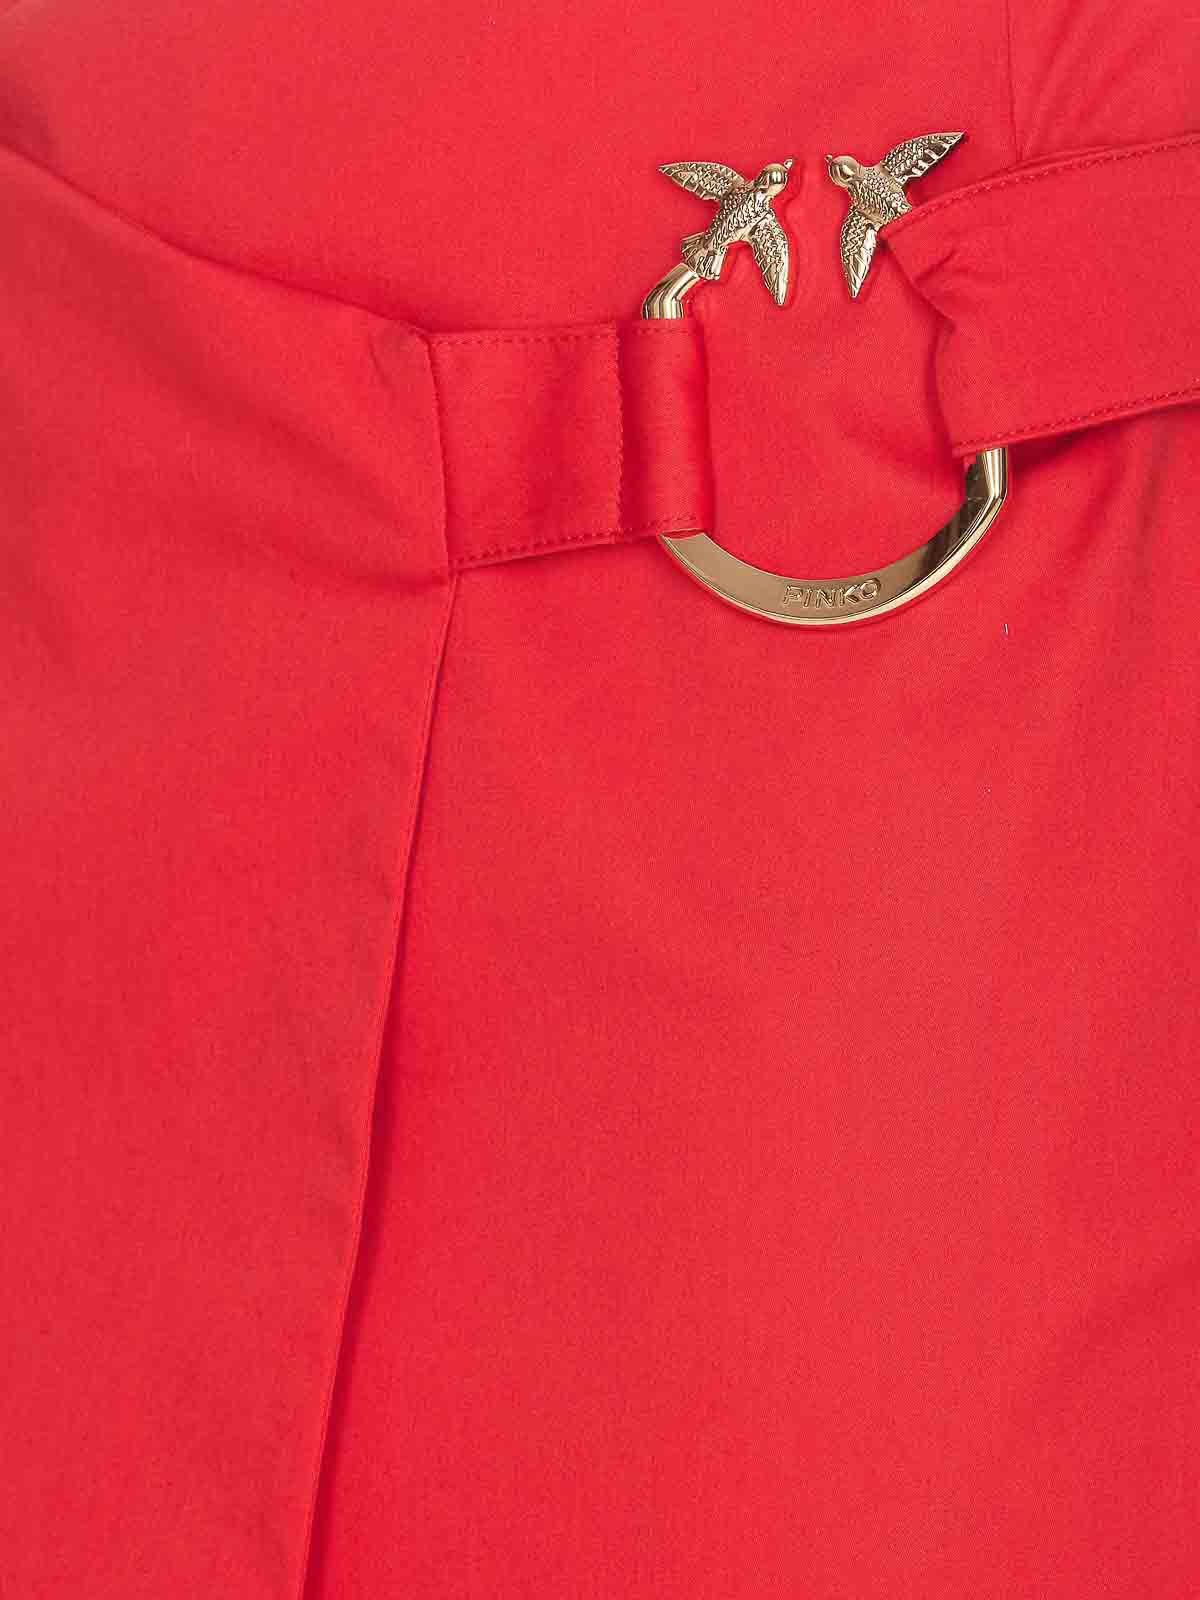 Shop Pinko Red Eurito Skirt Lateral Zip High